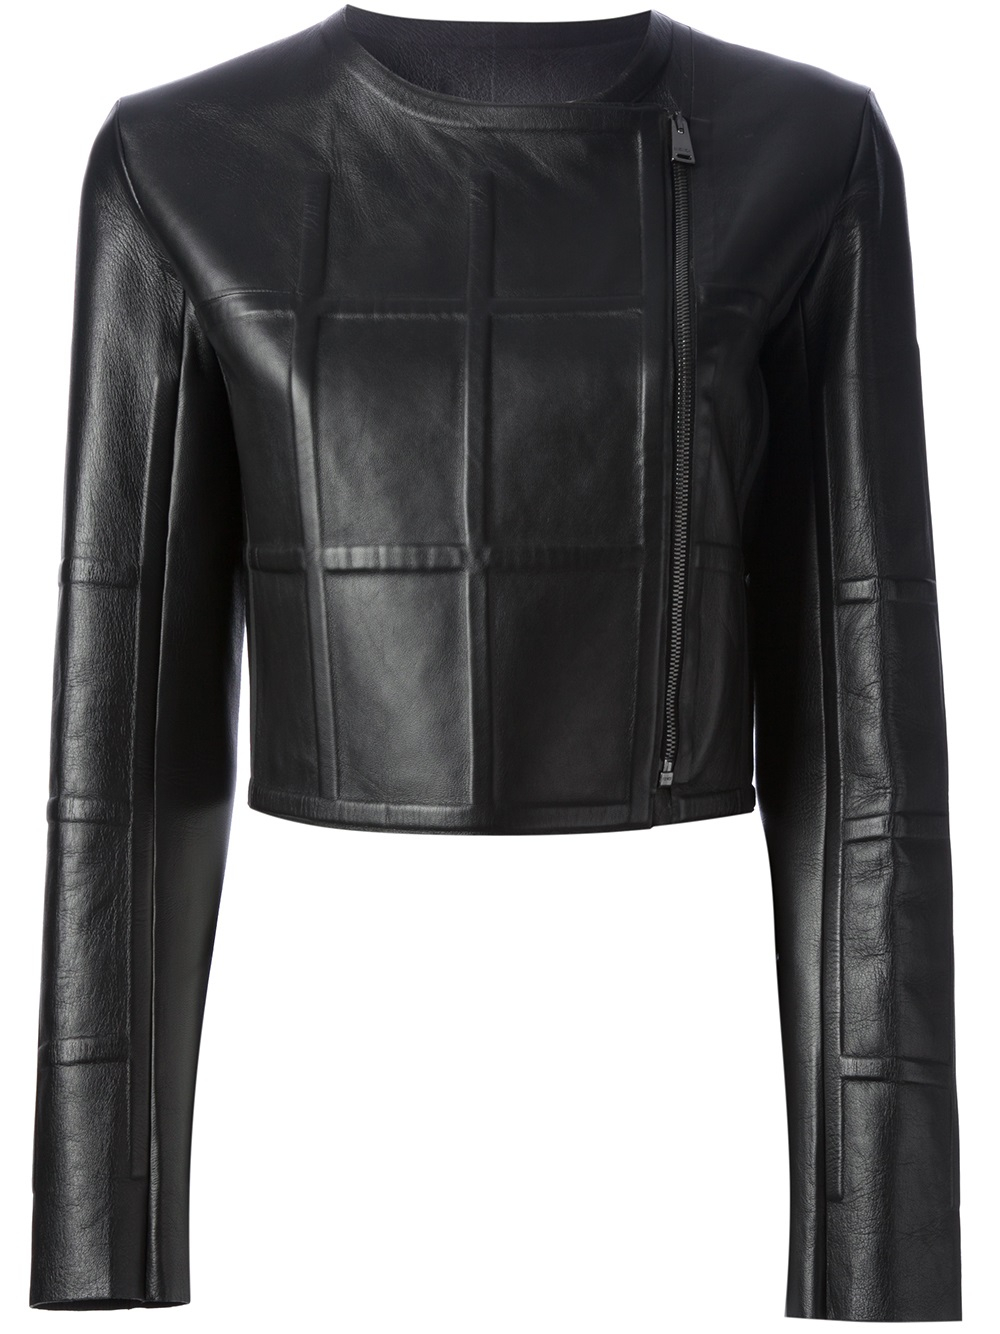 Lyst - Fendi Cropped Leather Jacket in Black